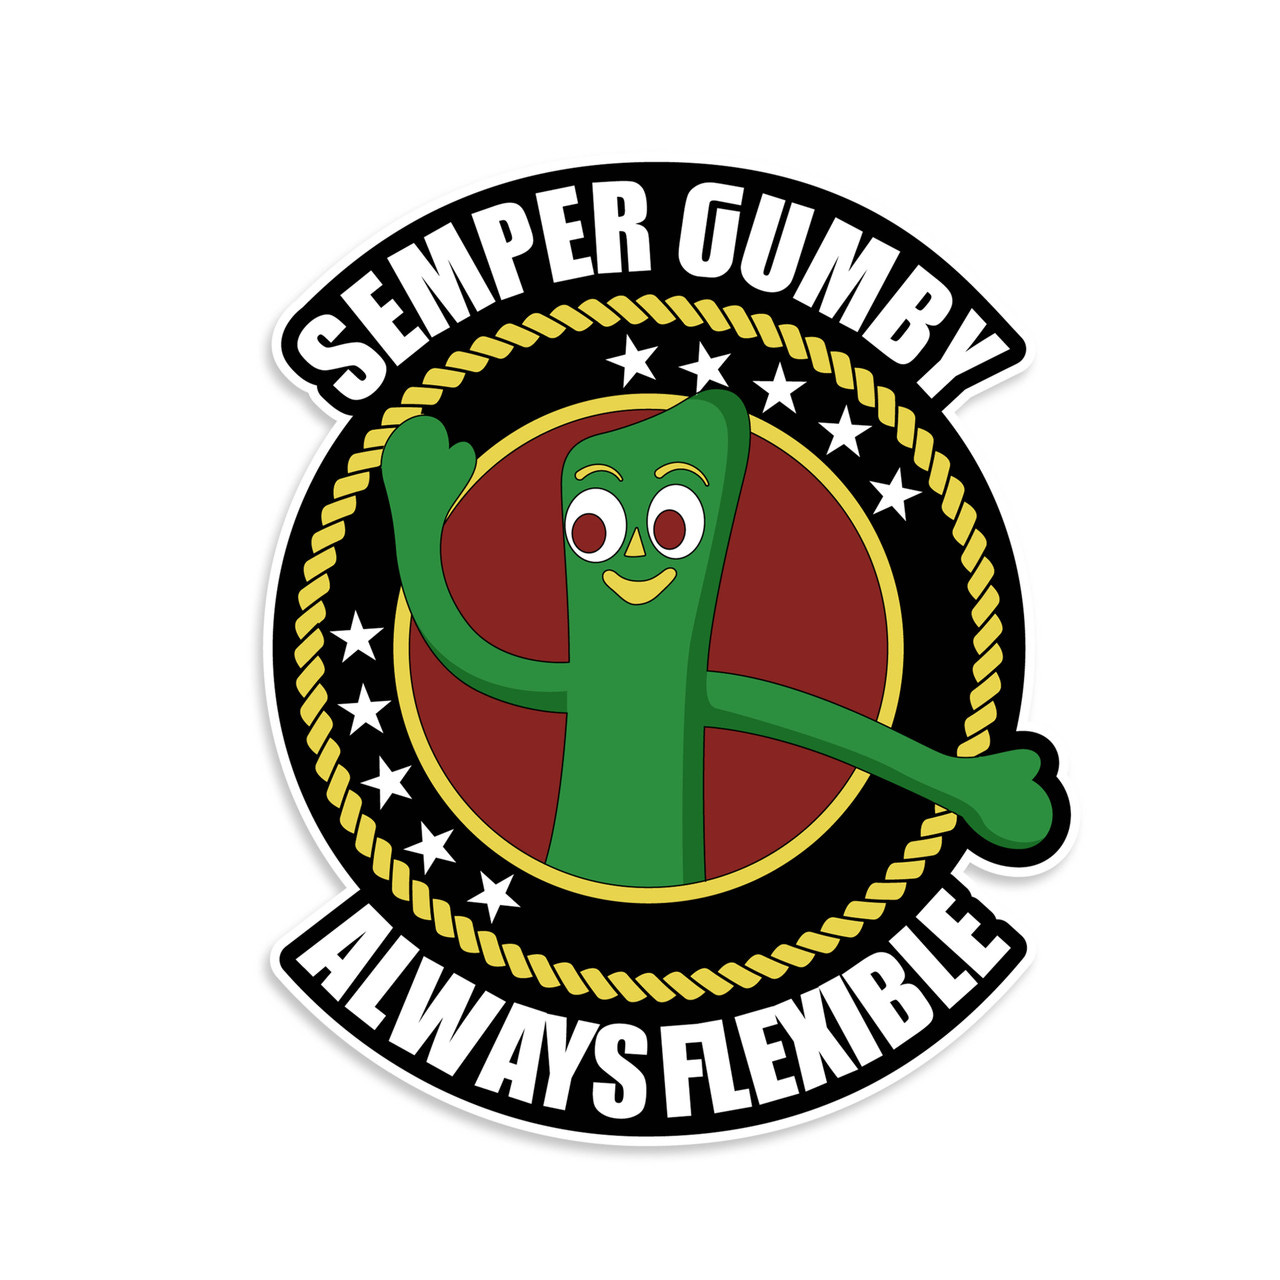 Semper Gumby Always Flexible United States Marine Corps USMC Vinyl Sticker